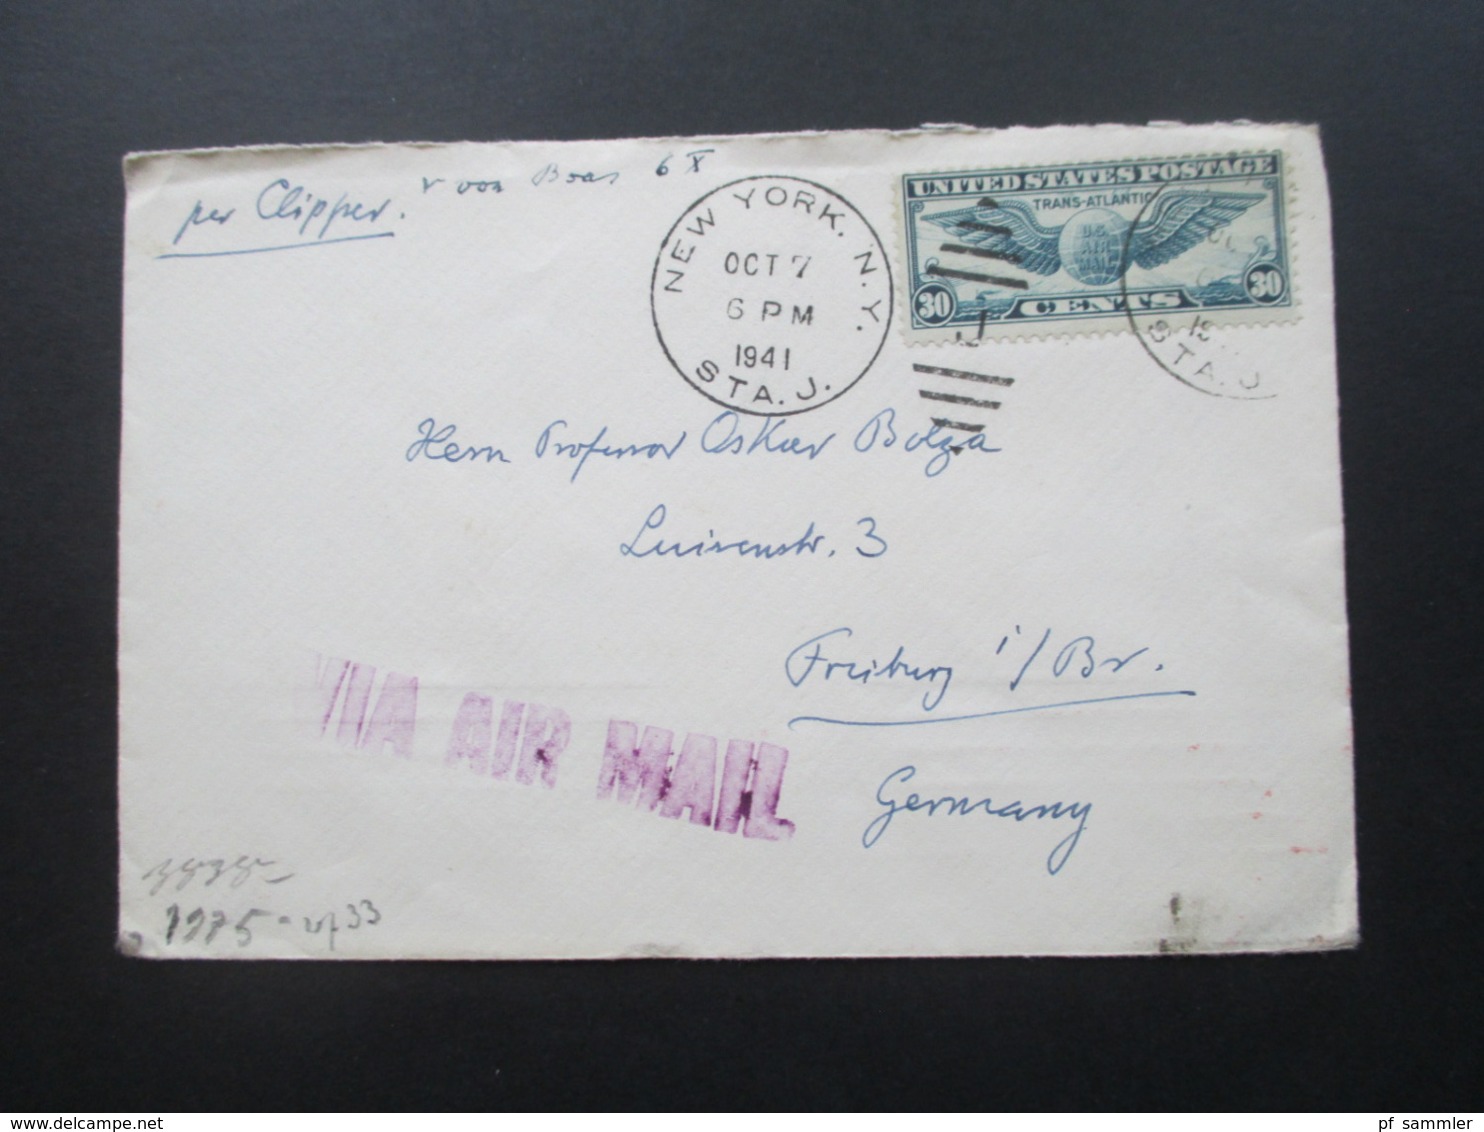 USA 1941 Zensurbeleg Mehrfachzensur OKW Air Mail Per Clipper Trans Atlantic Social Philately Dr.Oskar Bolza Mathematiker - Cartas & Documentos